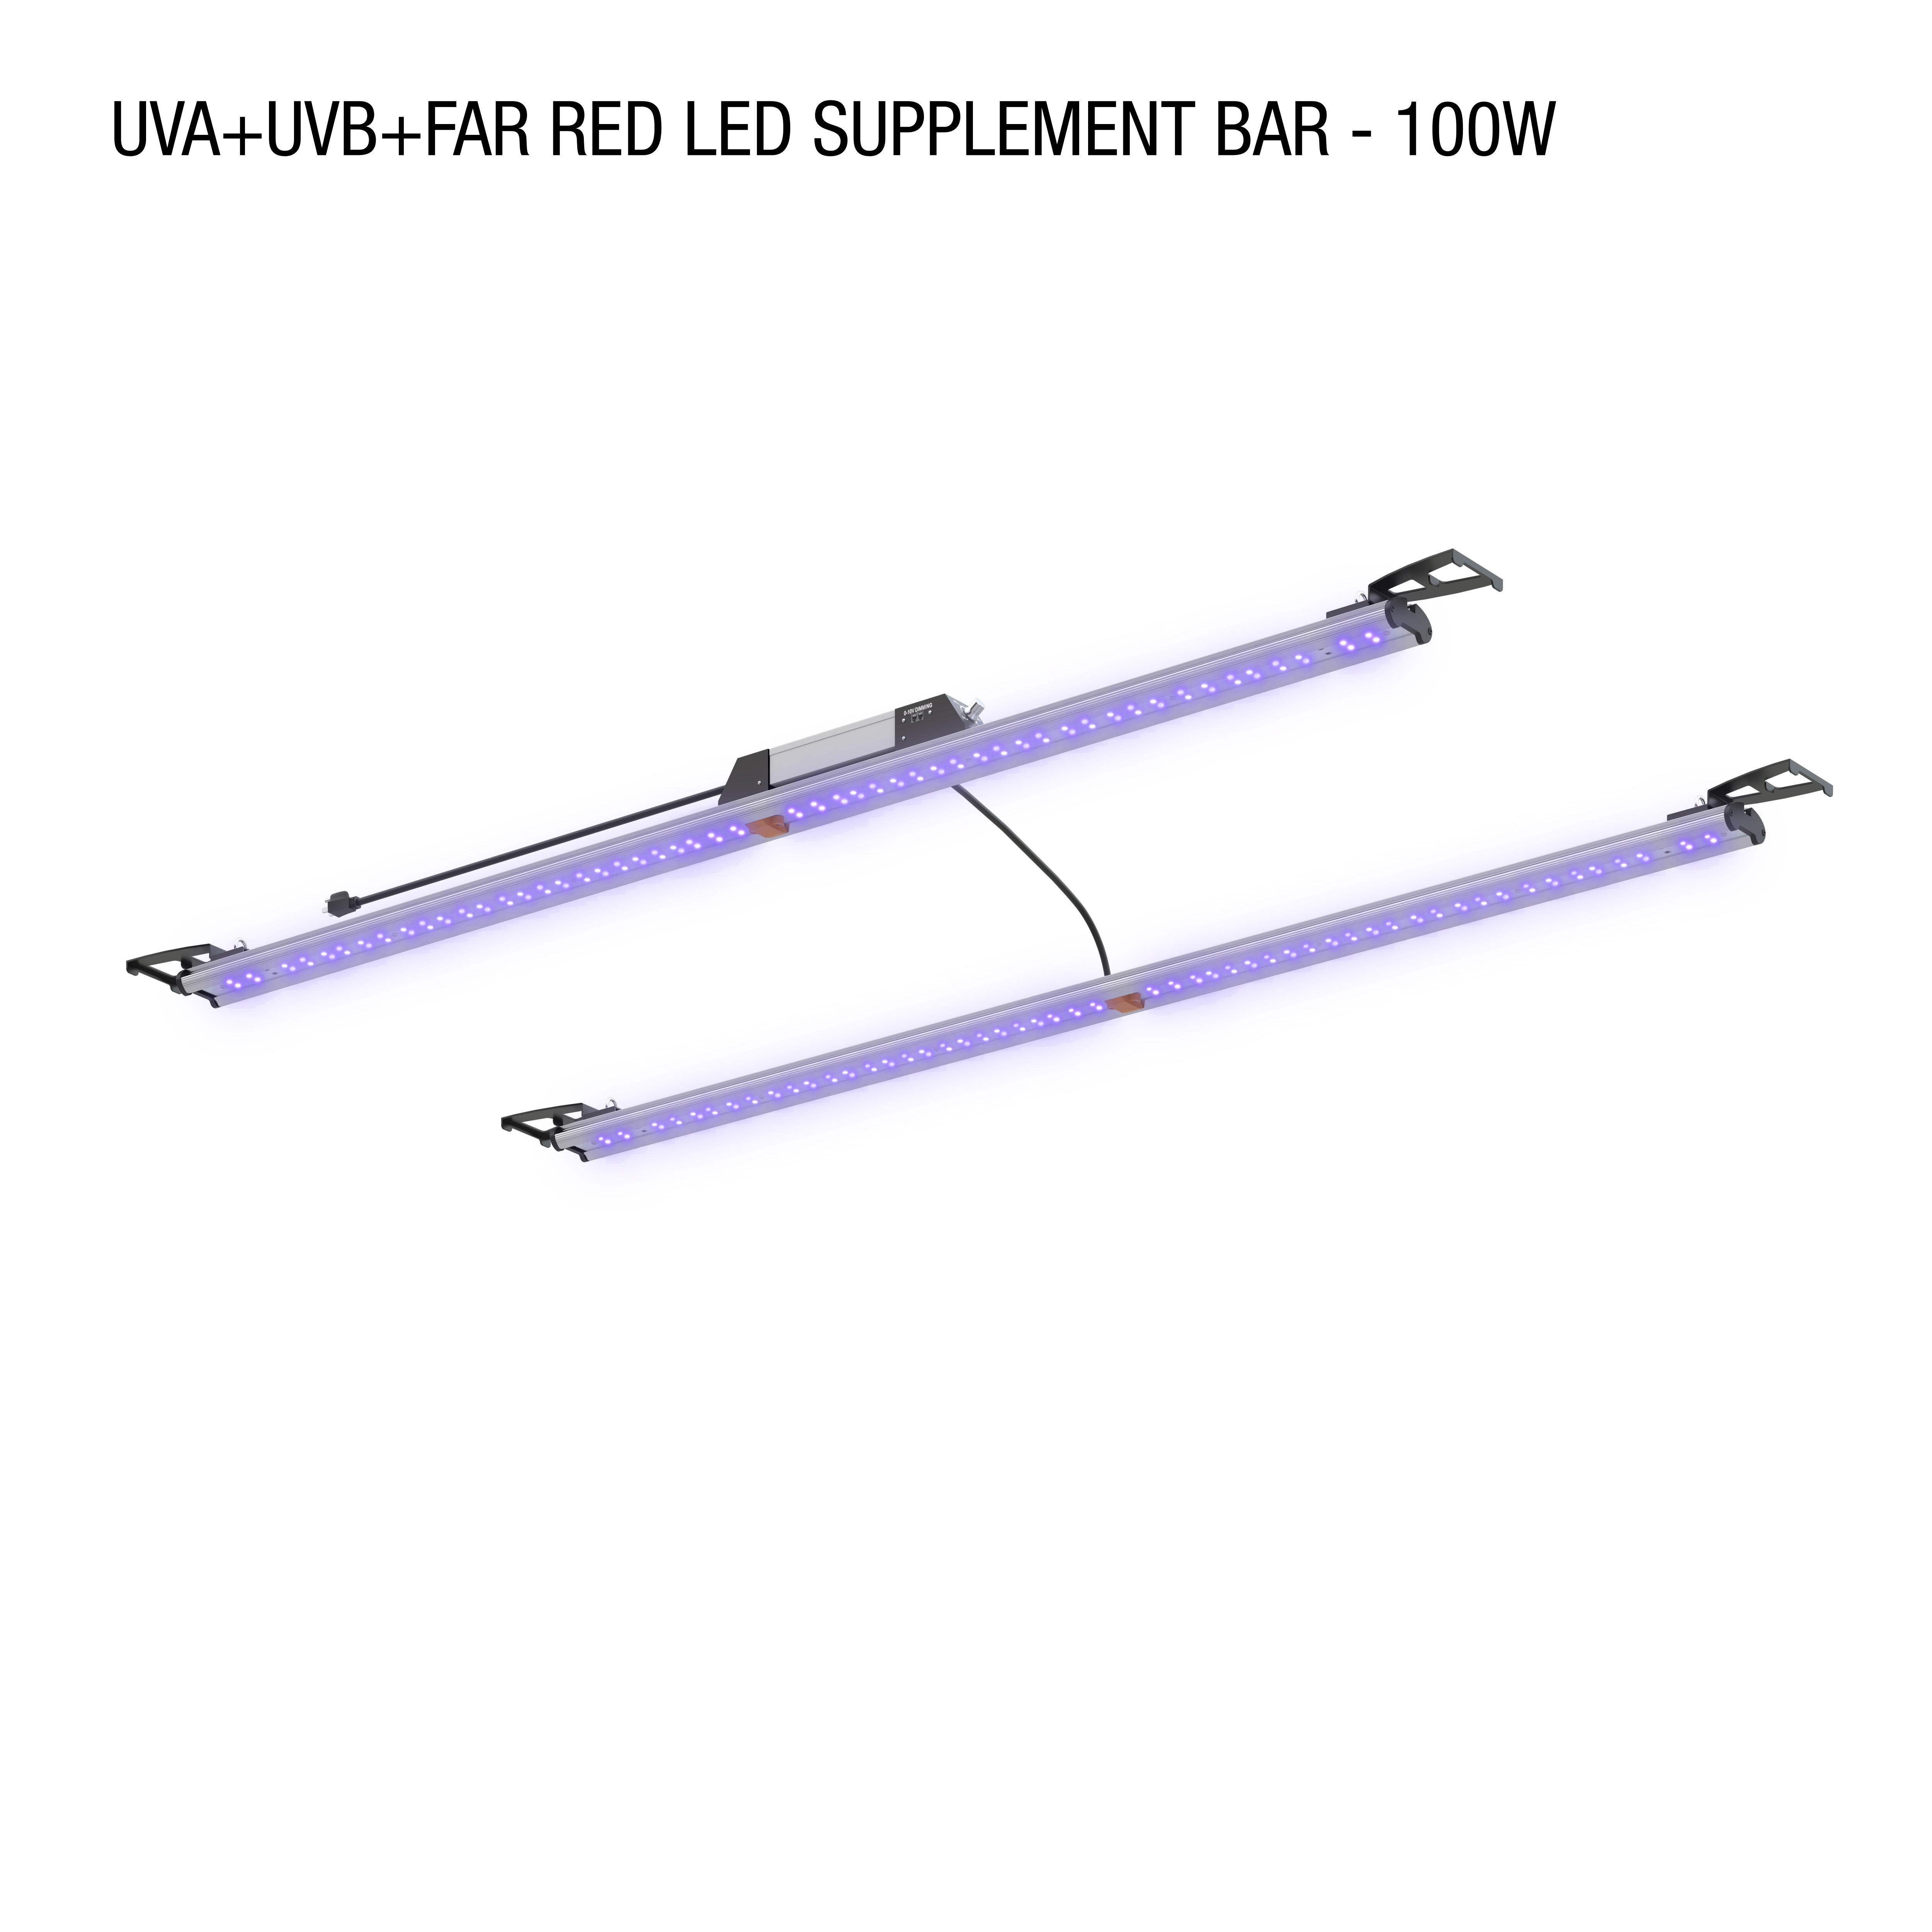 UVA+UVB+FR Supplemental Spectrum Light Bar - 100W